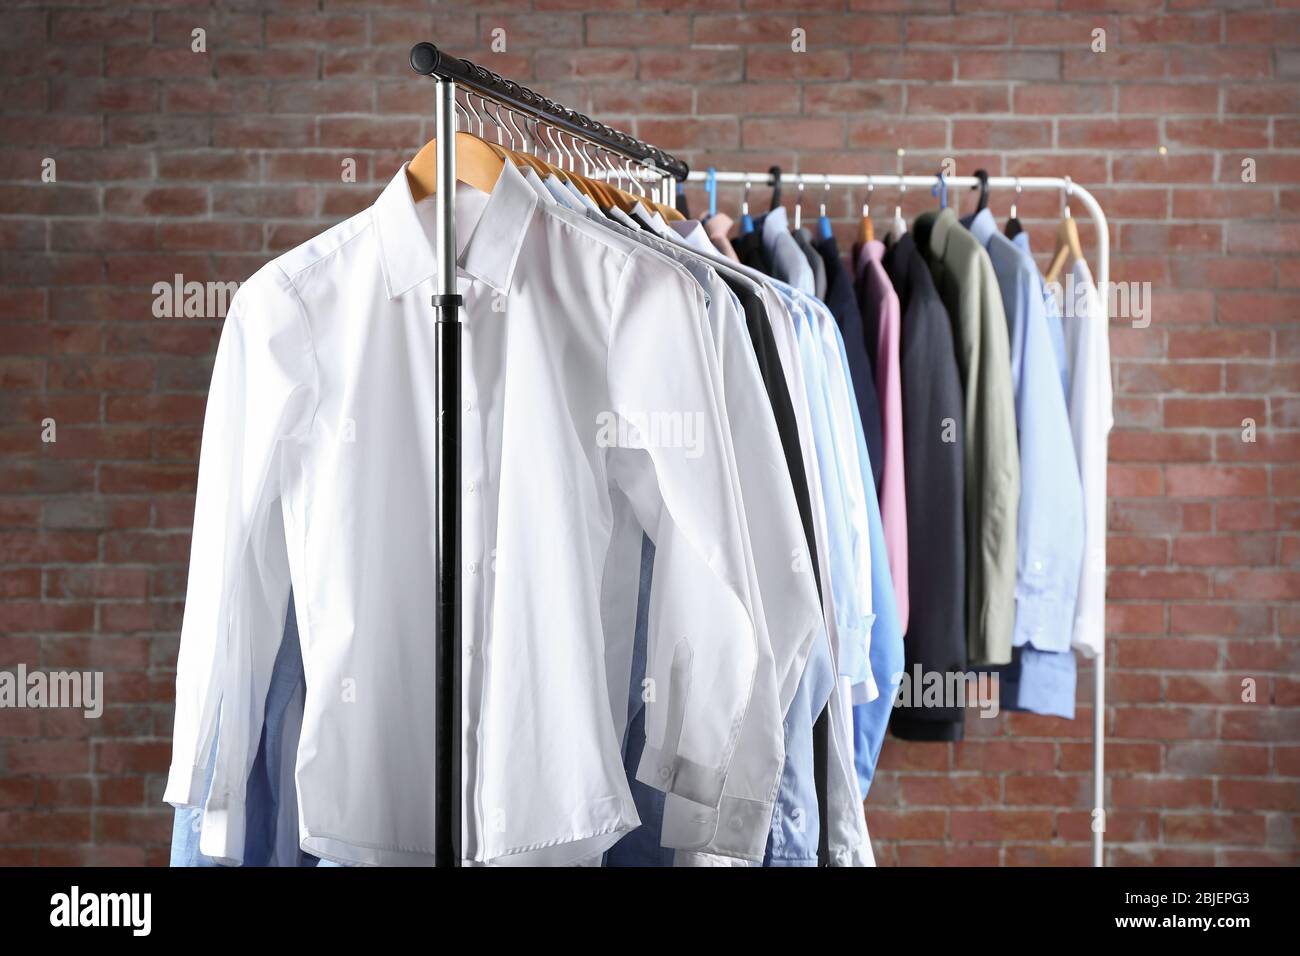 https://c8.alamy.com/comp/2BJEPG3/rack-of-clean-clothes-hanging-on-hangers-at-dry-cleaning-2BJEPG3.jpg